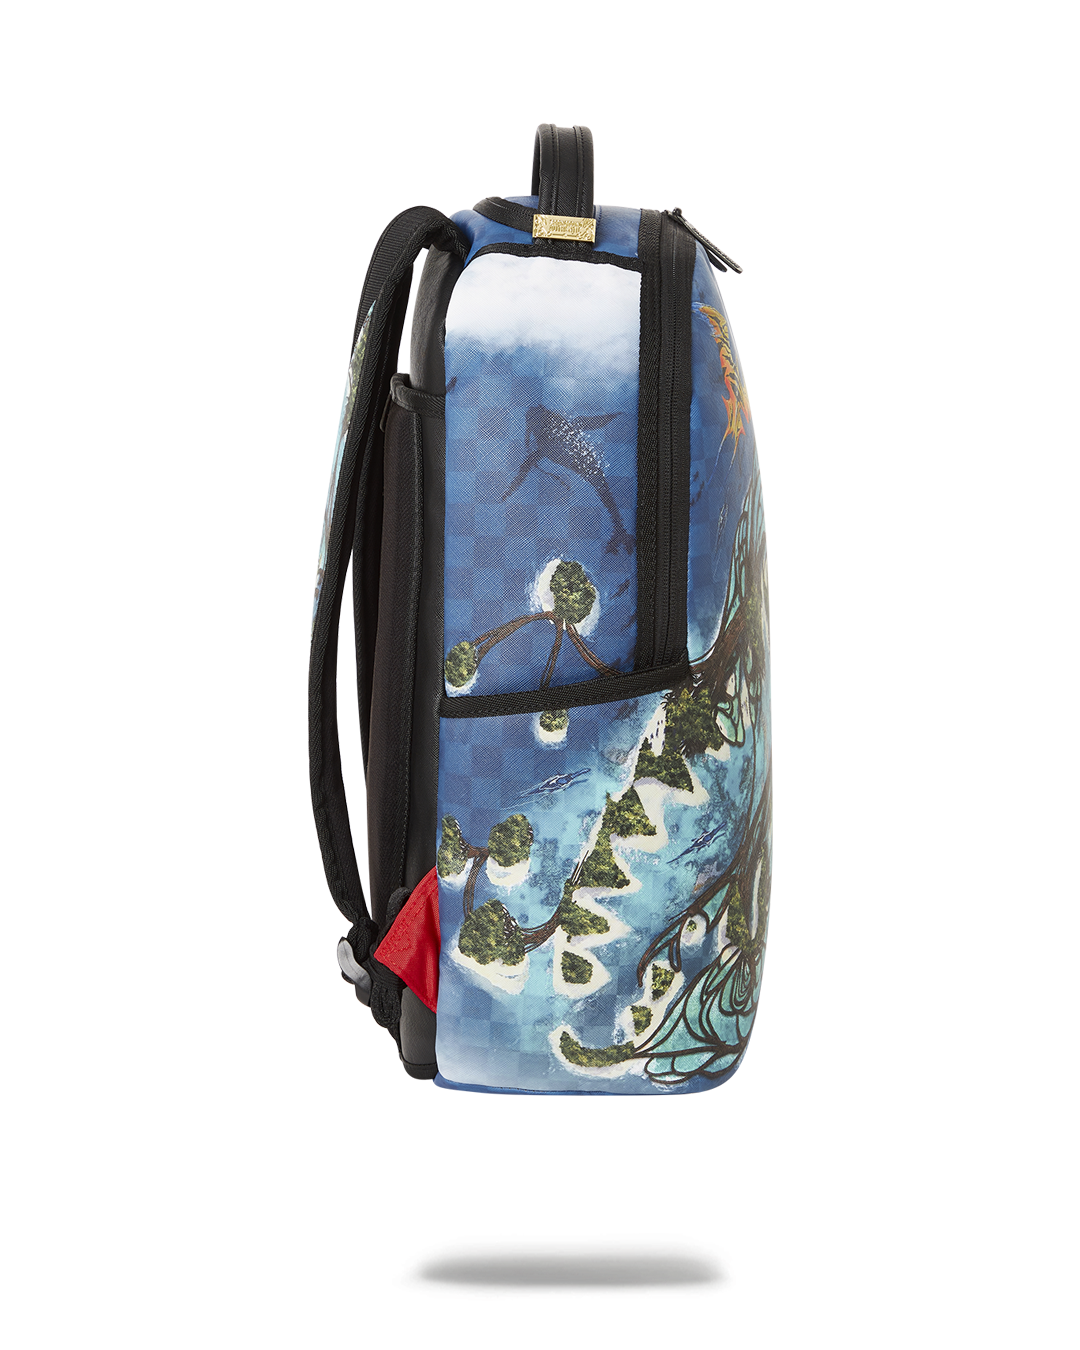 Sprayground Avatar Jake & Neytiri Ocean Shark Backpack B5193 – I